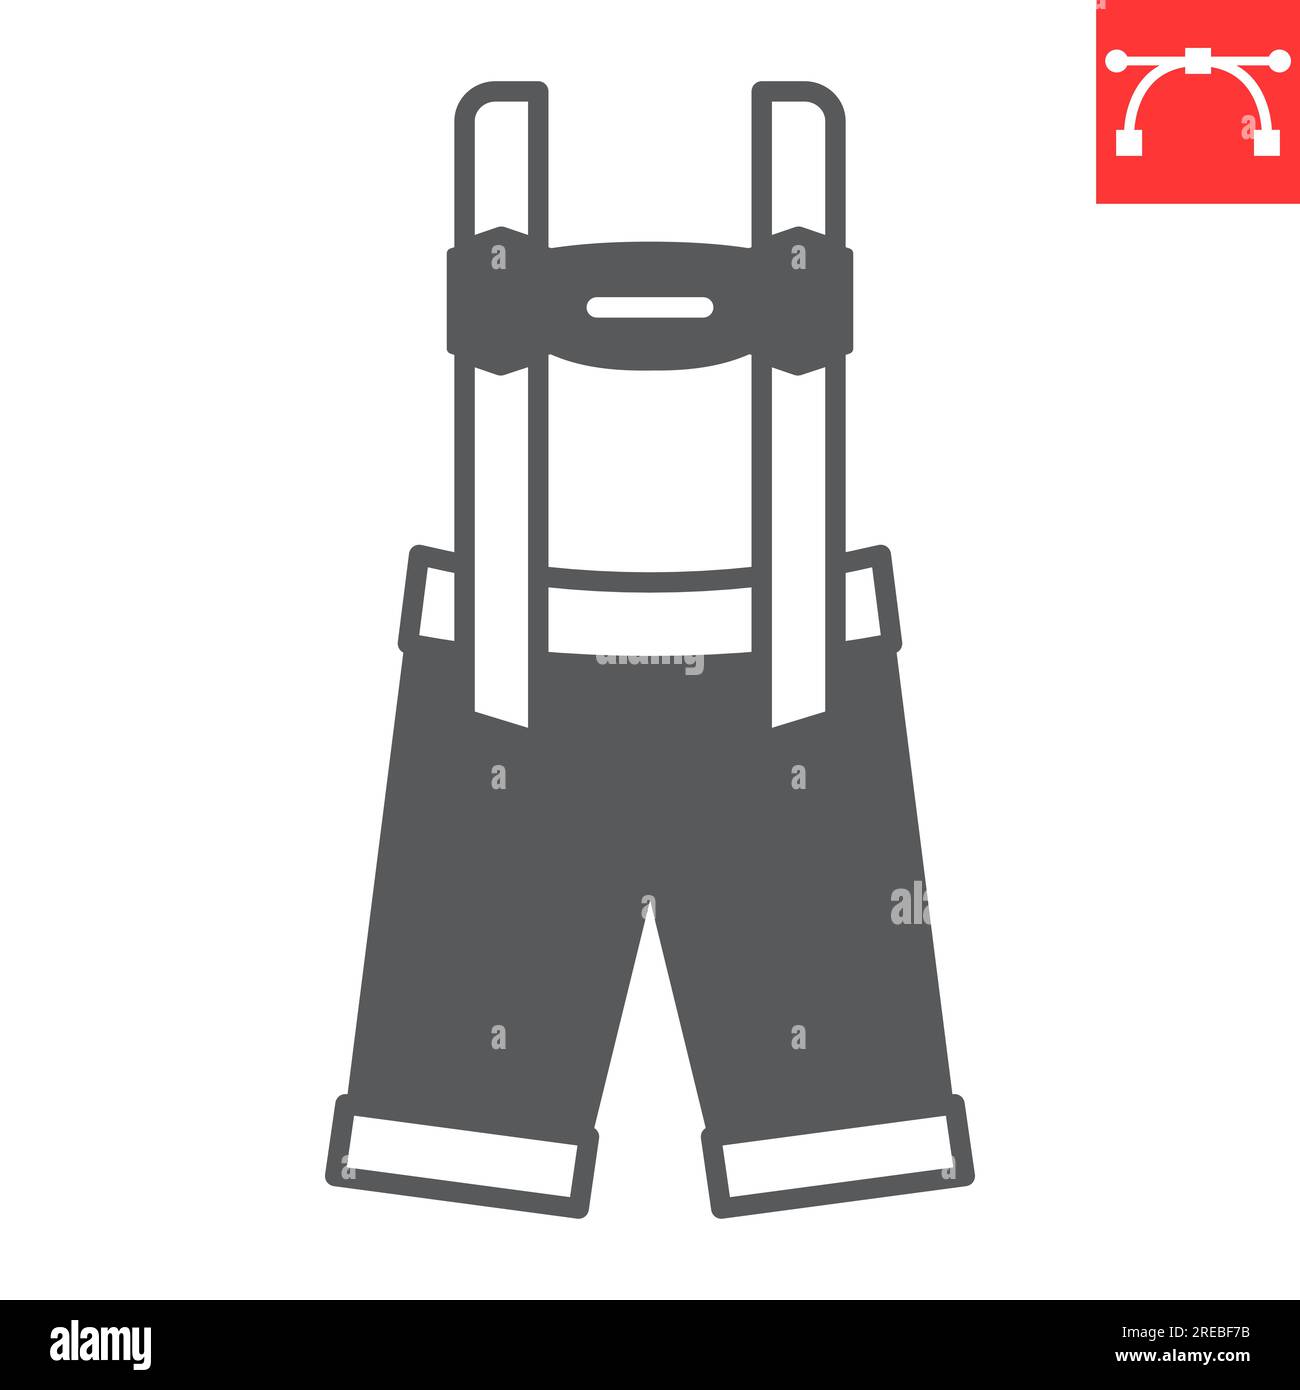 Lederhosen shorts Stock Vector Images - Alamy